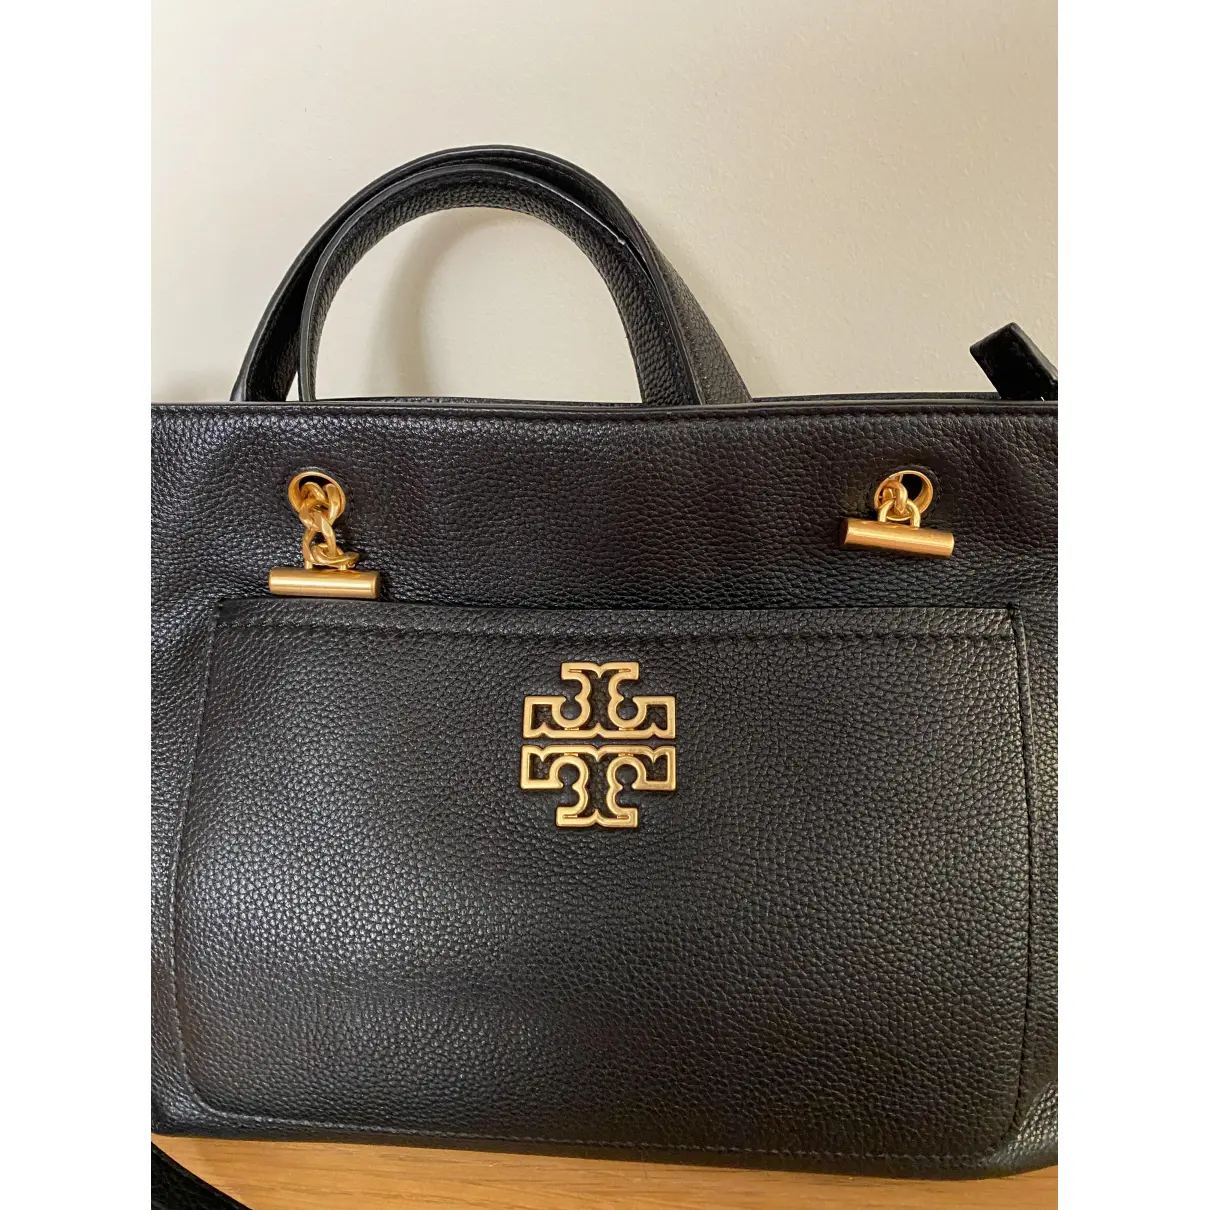 Buy Tory Burch Leather handbag online